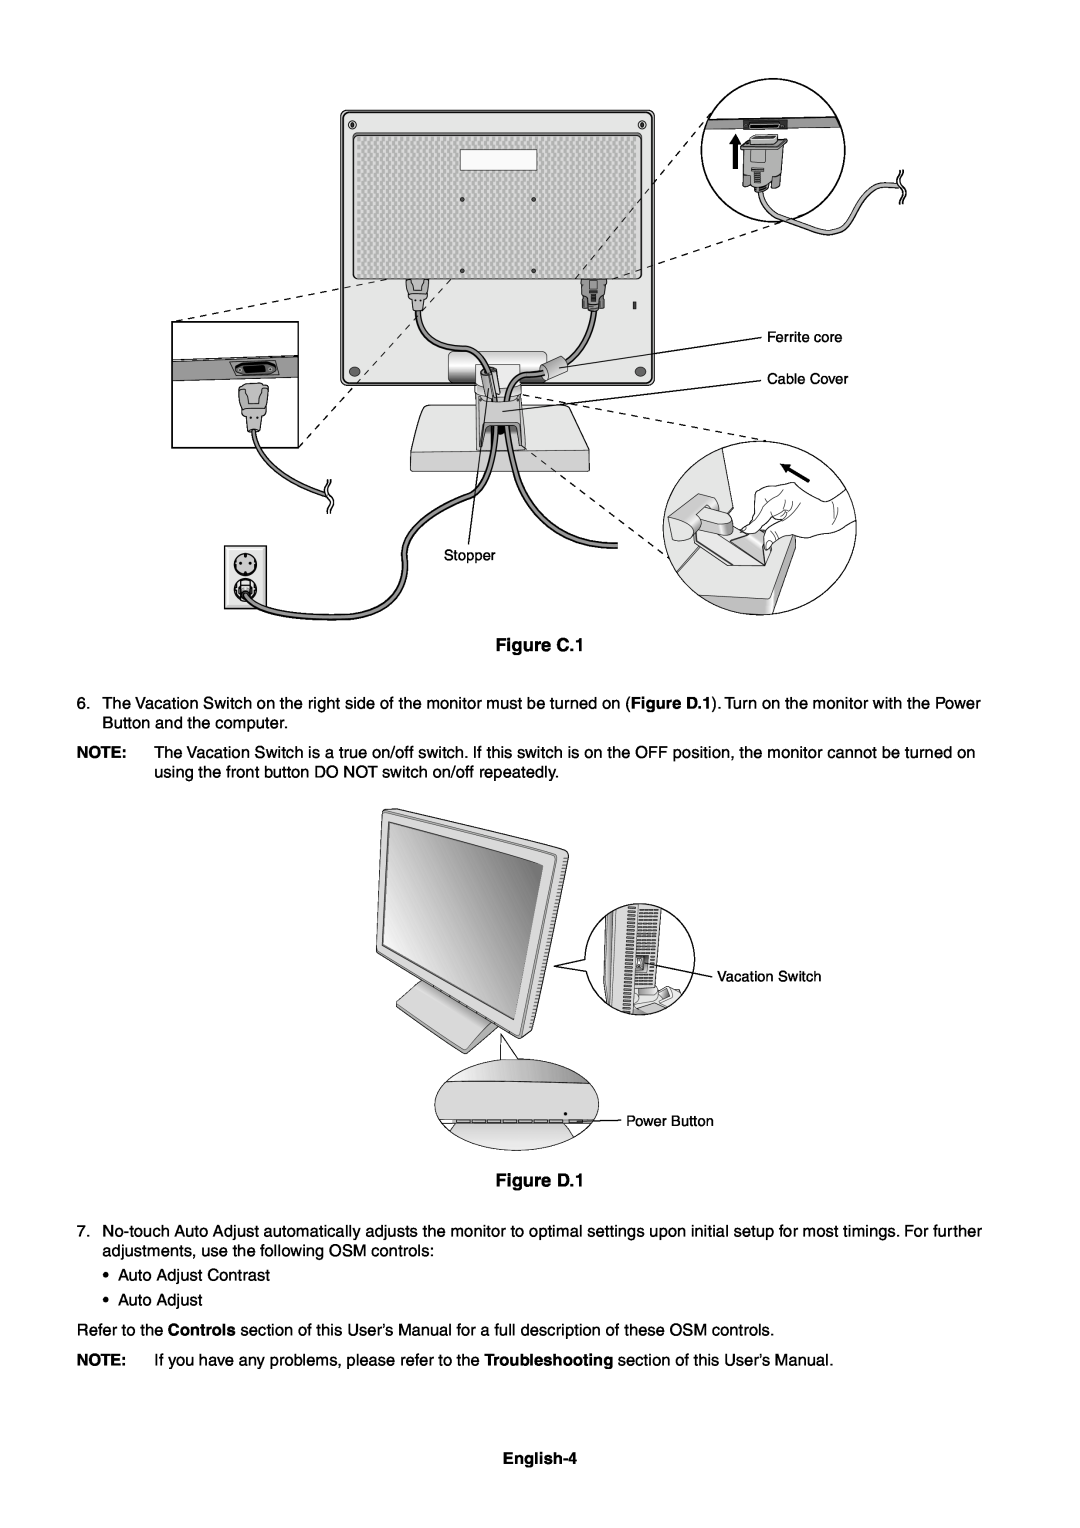 NEC LCD1701 user manual Figure C.1, Figure D.1, English-4 